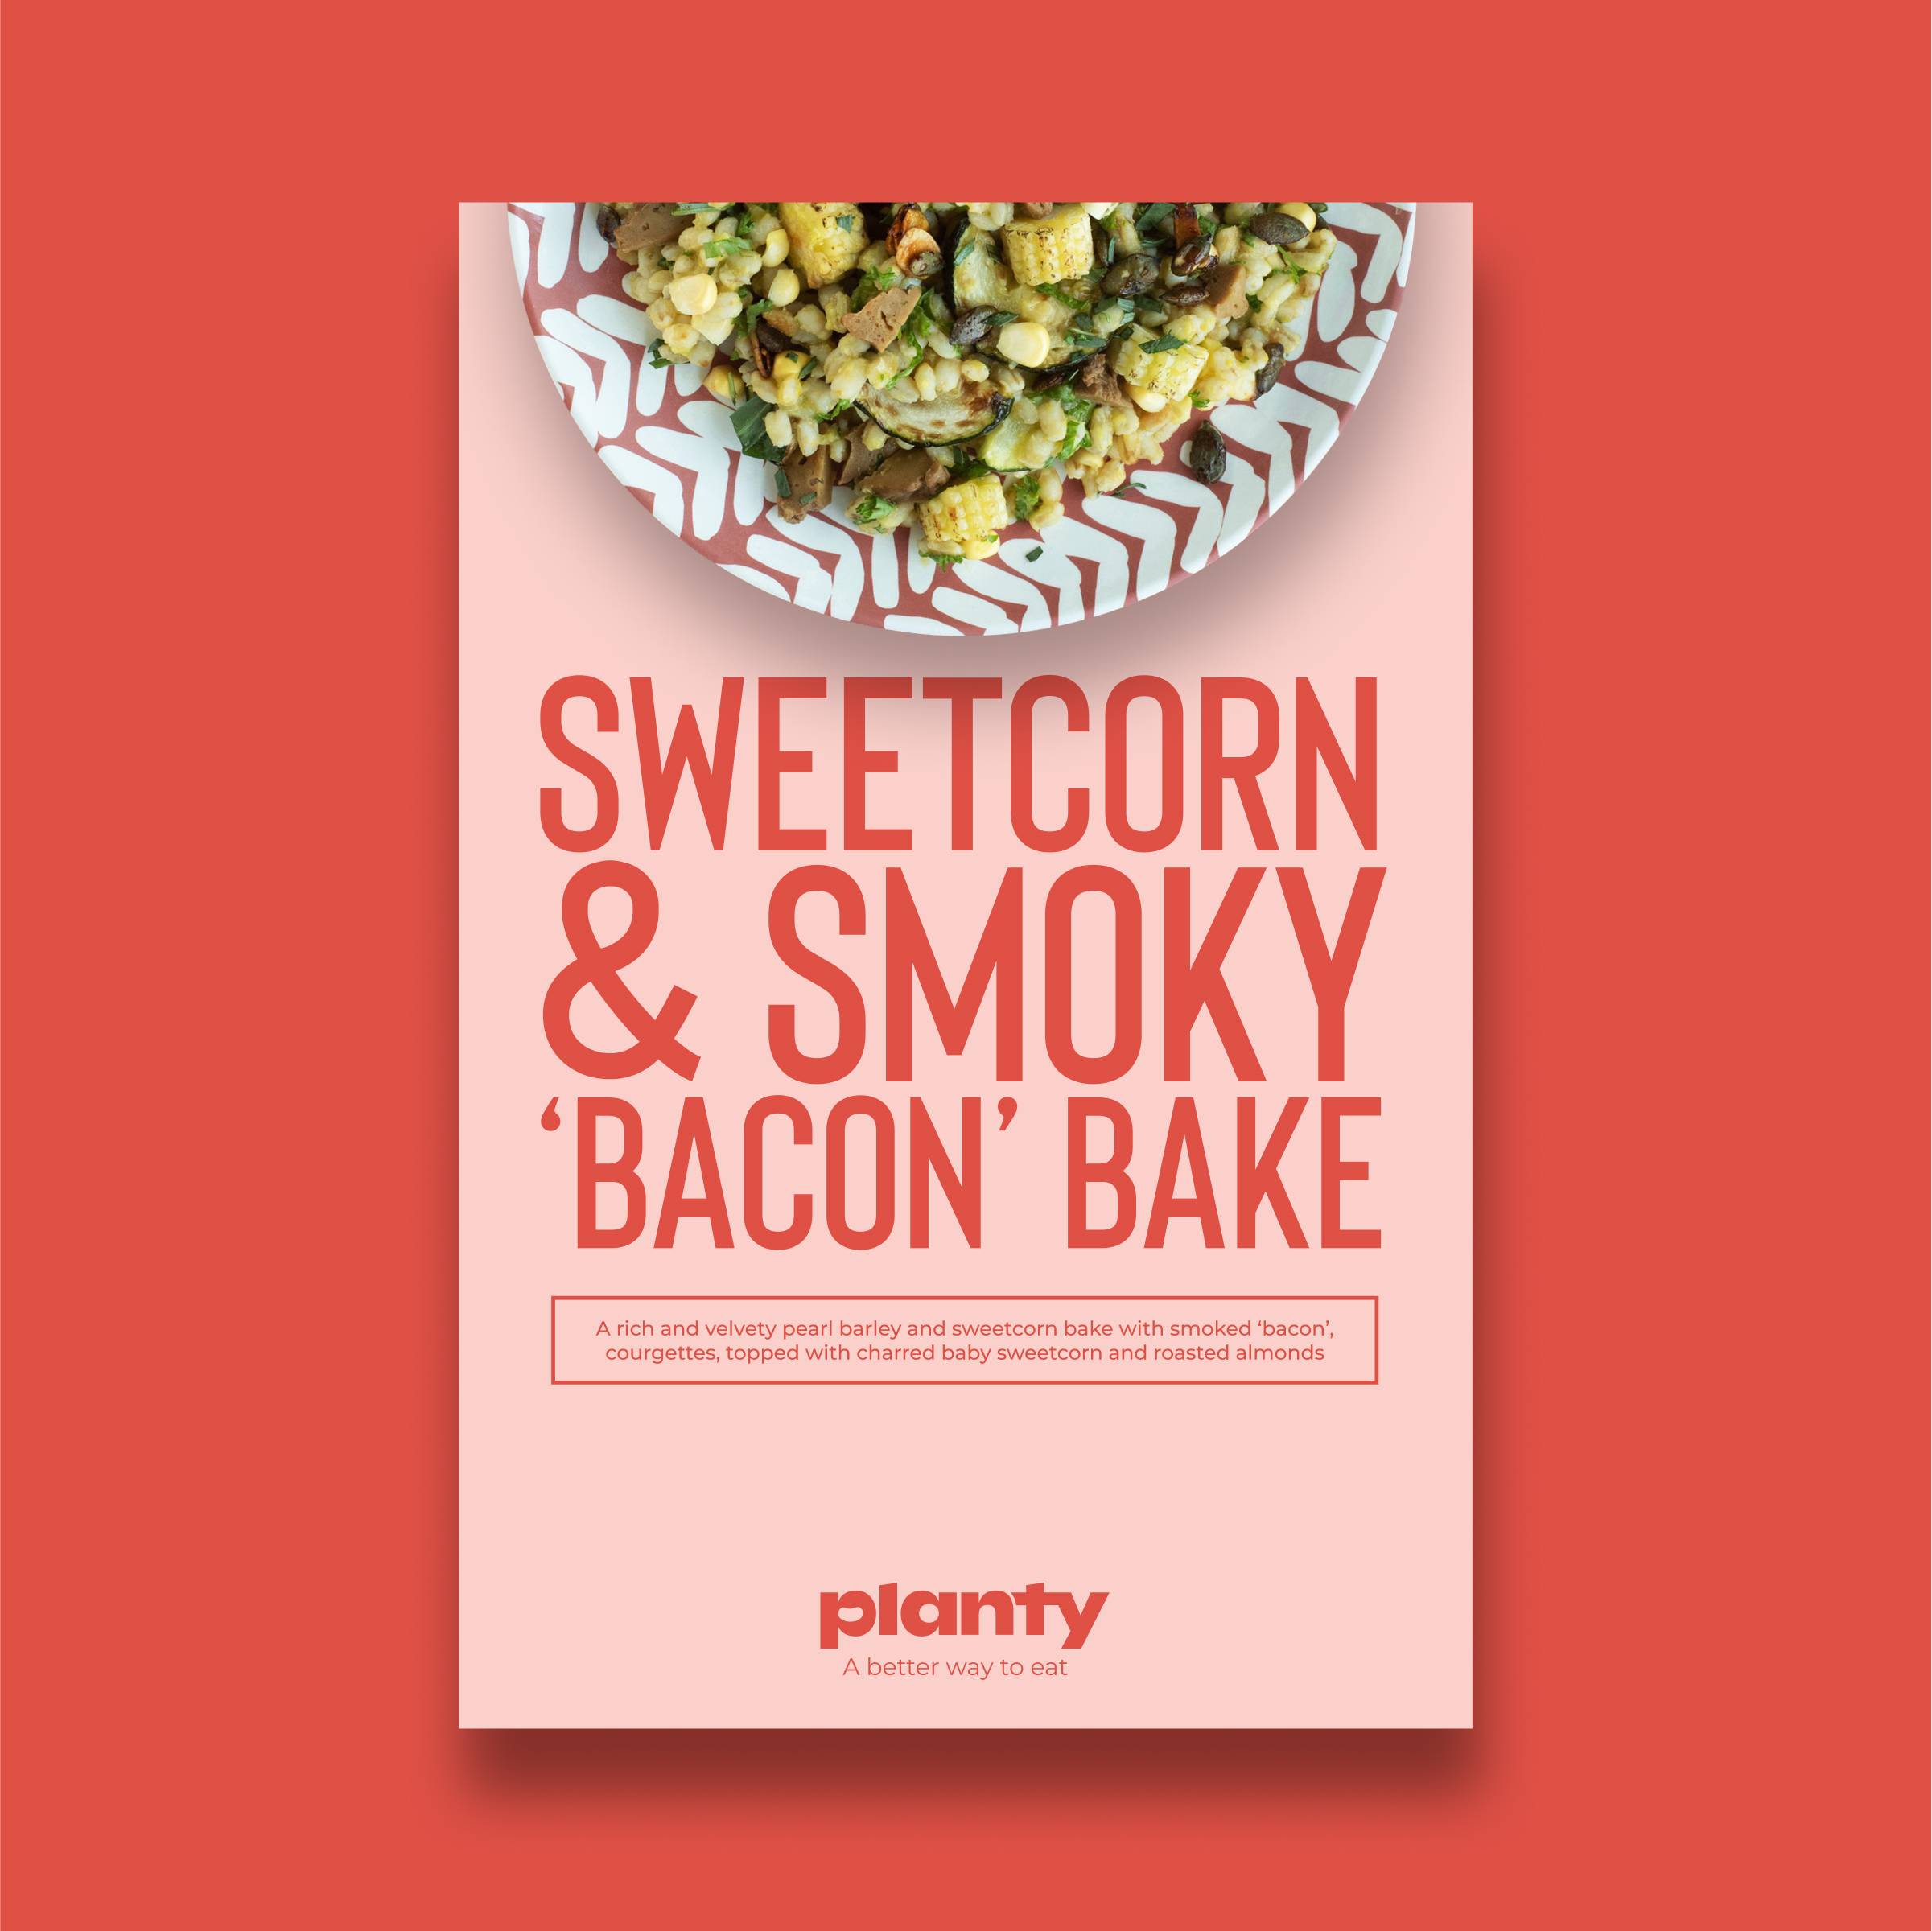 Sweetcorn & Smoky ‘Bacon’ Bake image 2